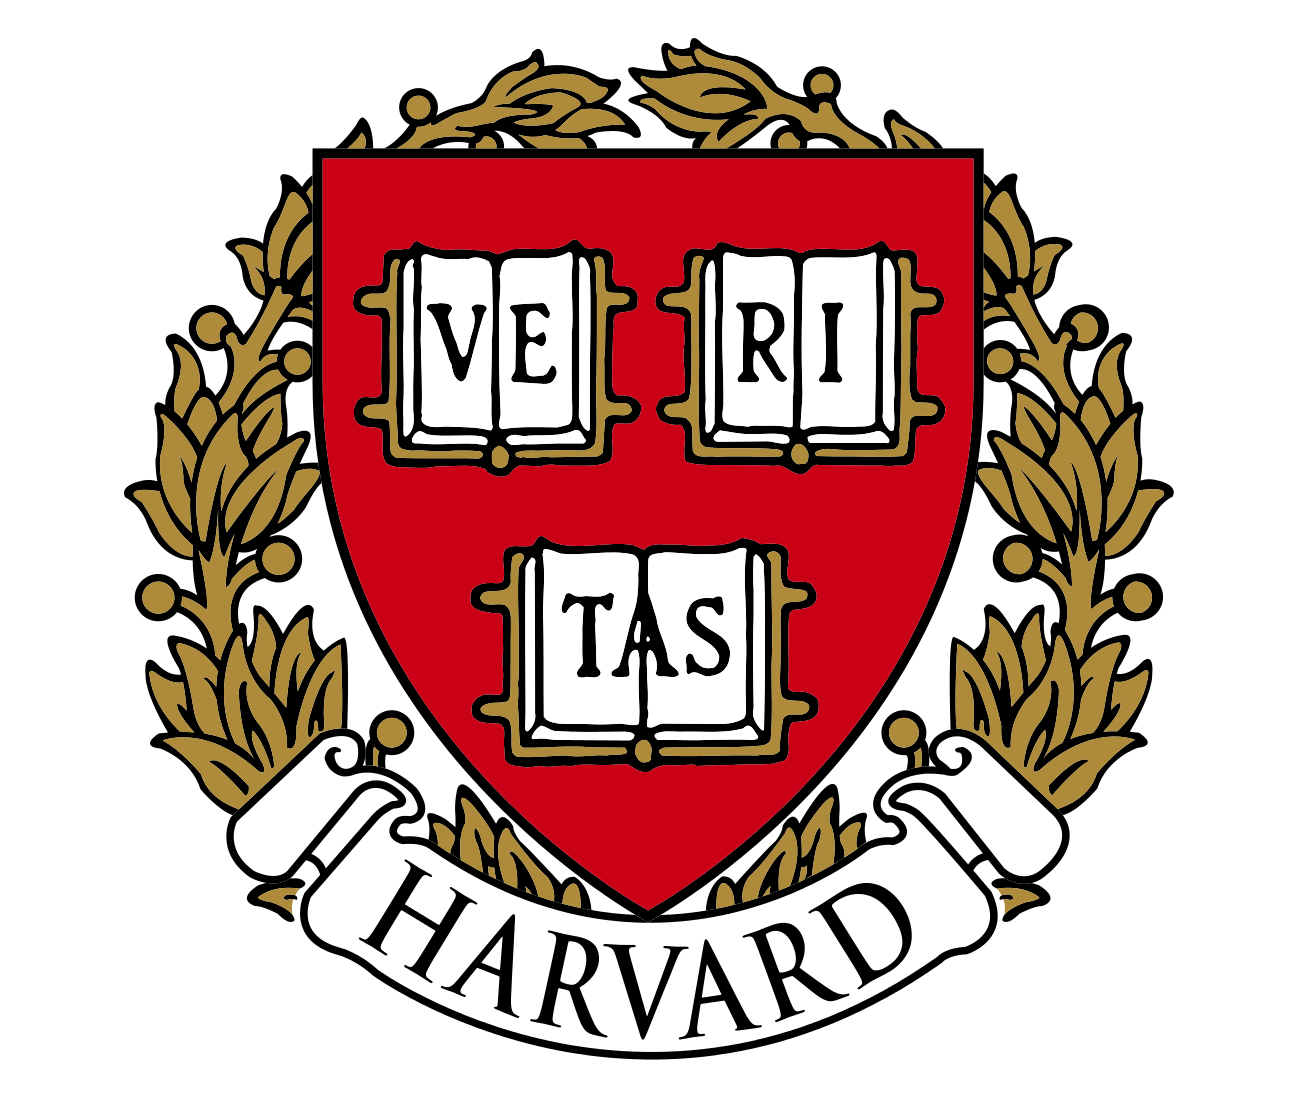 FREE Harvard digital collections